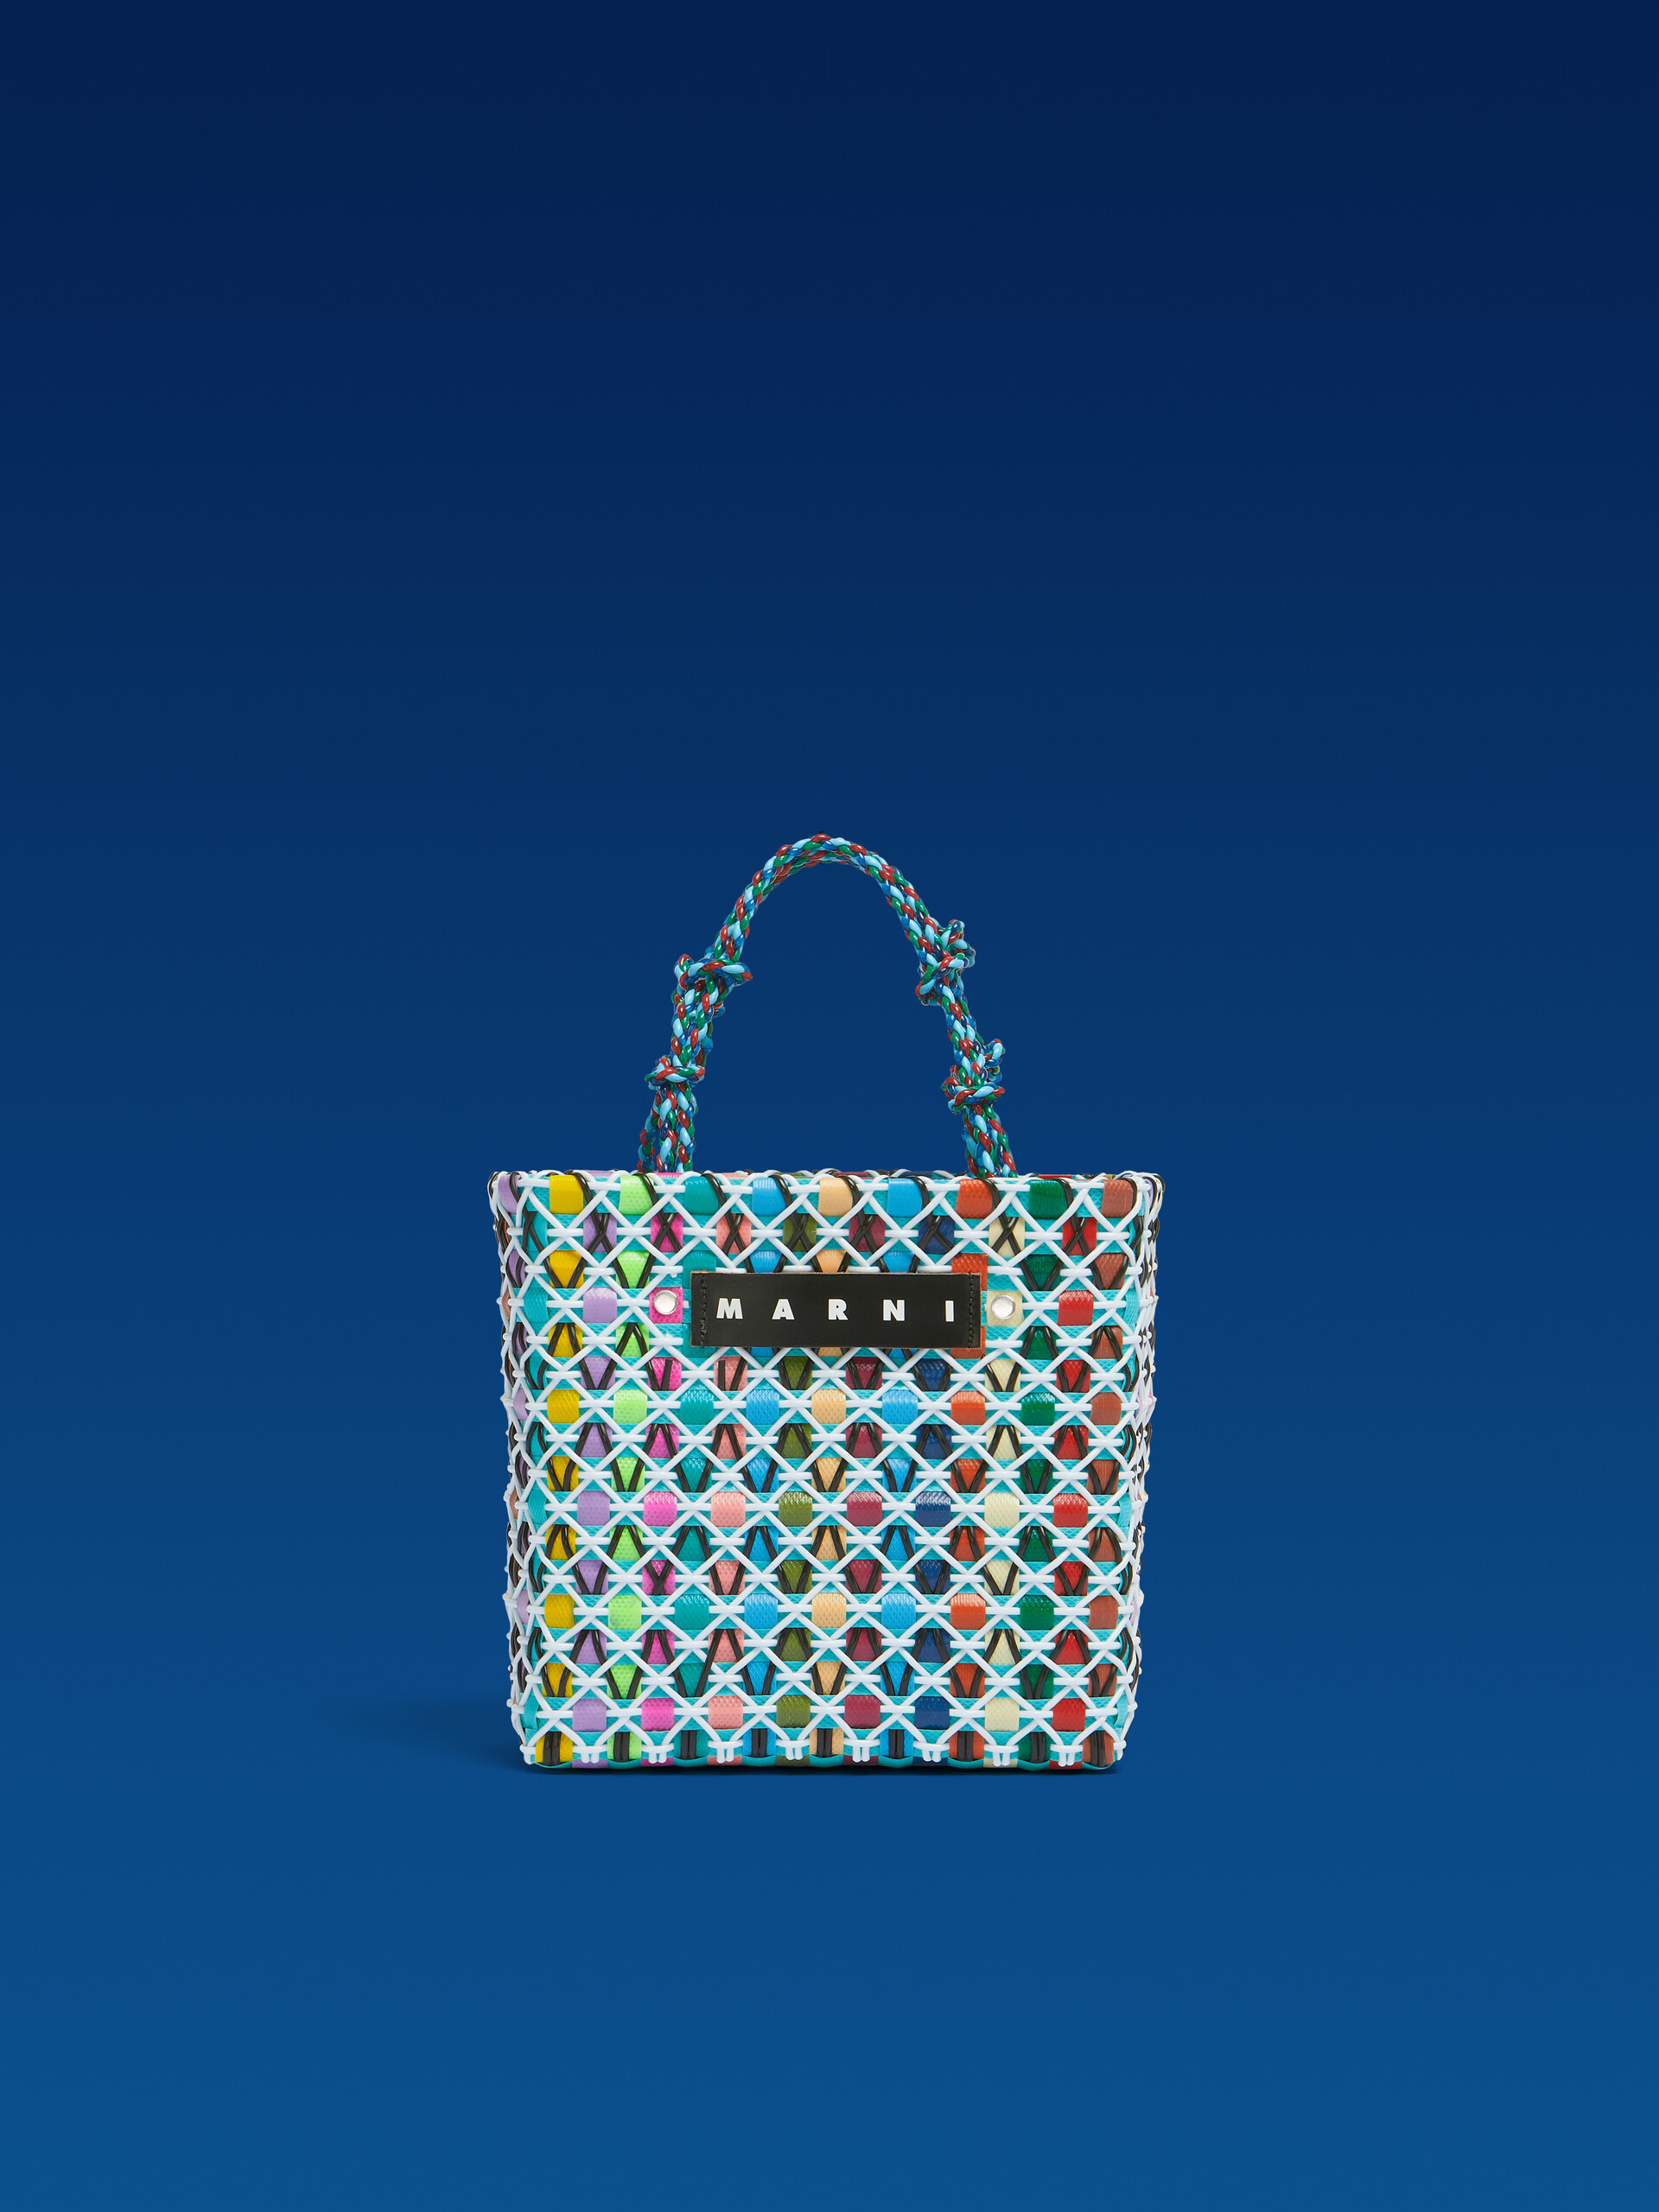 Blue MARNI MARKET CAKE BASKET bag - Shopping Bags - Image 1